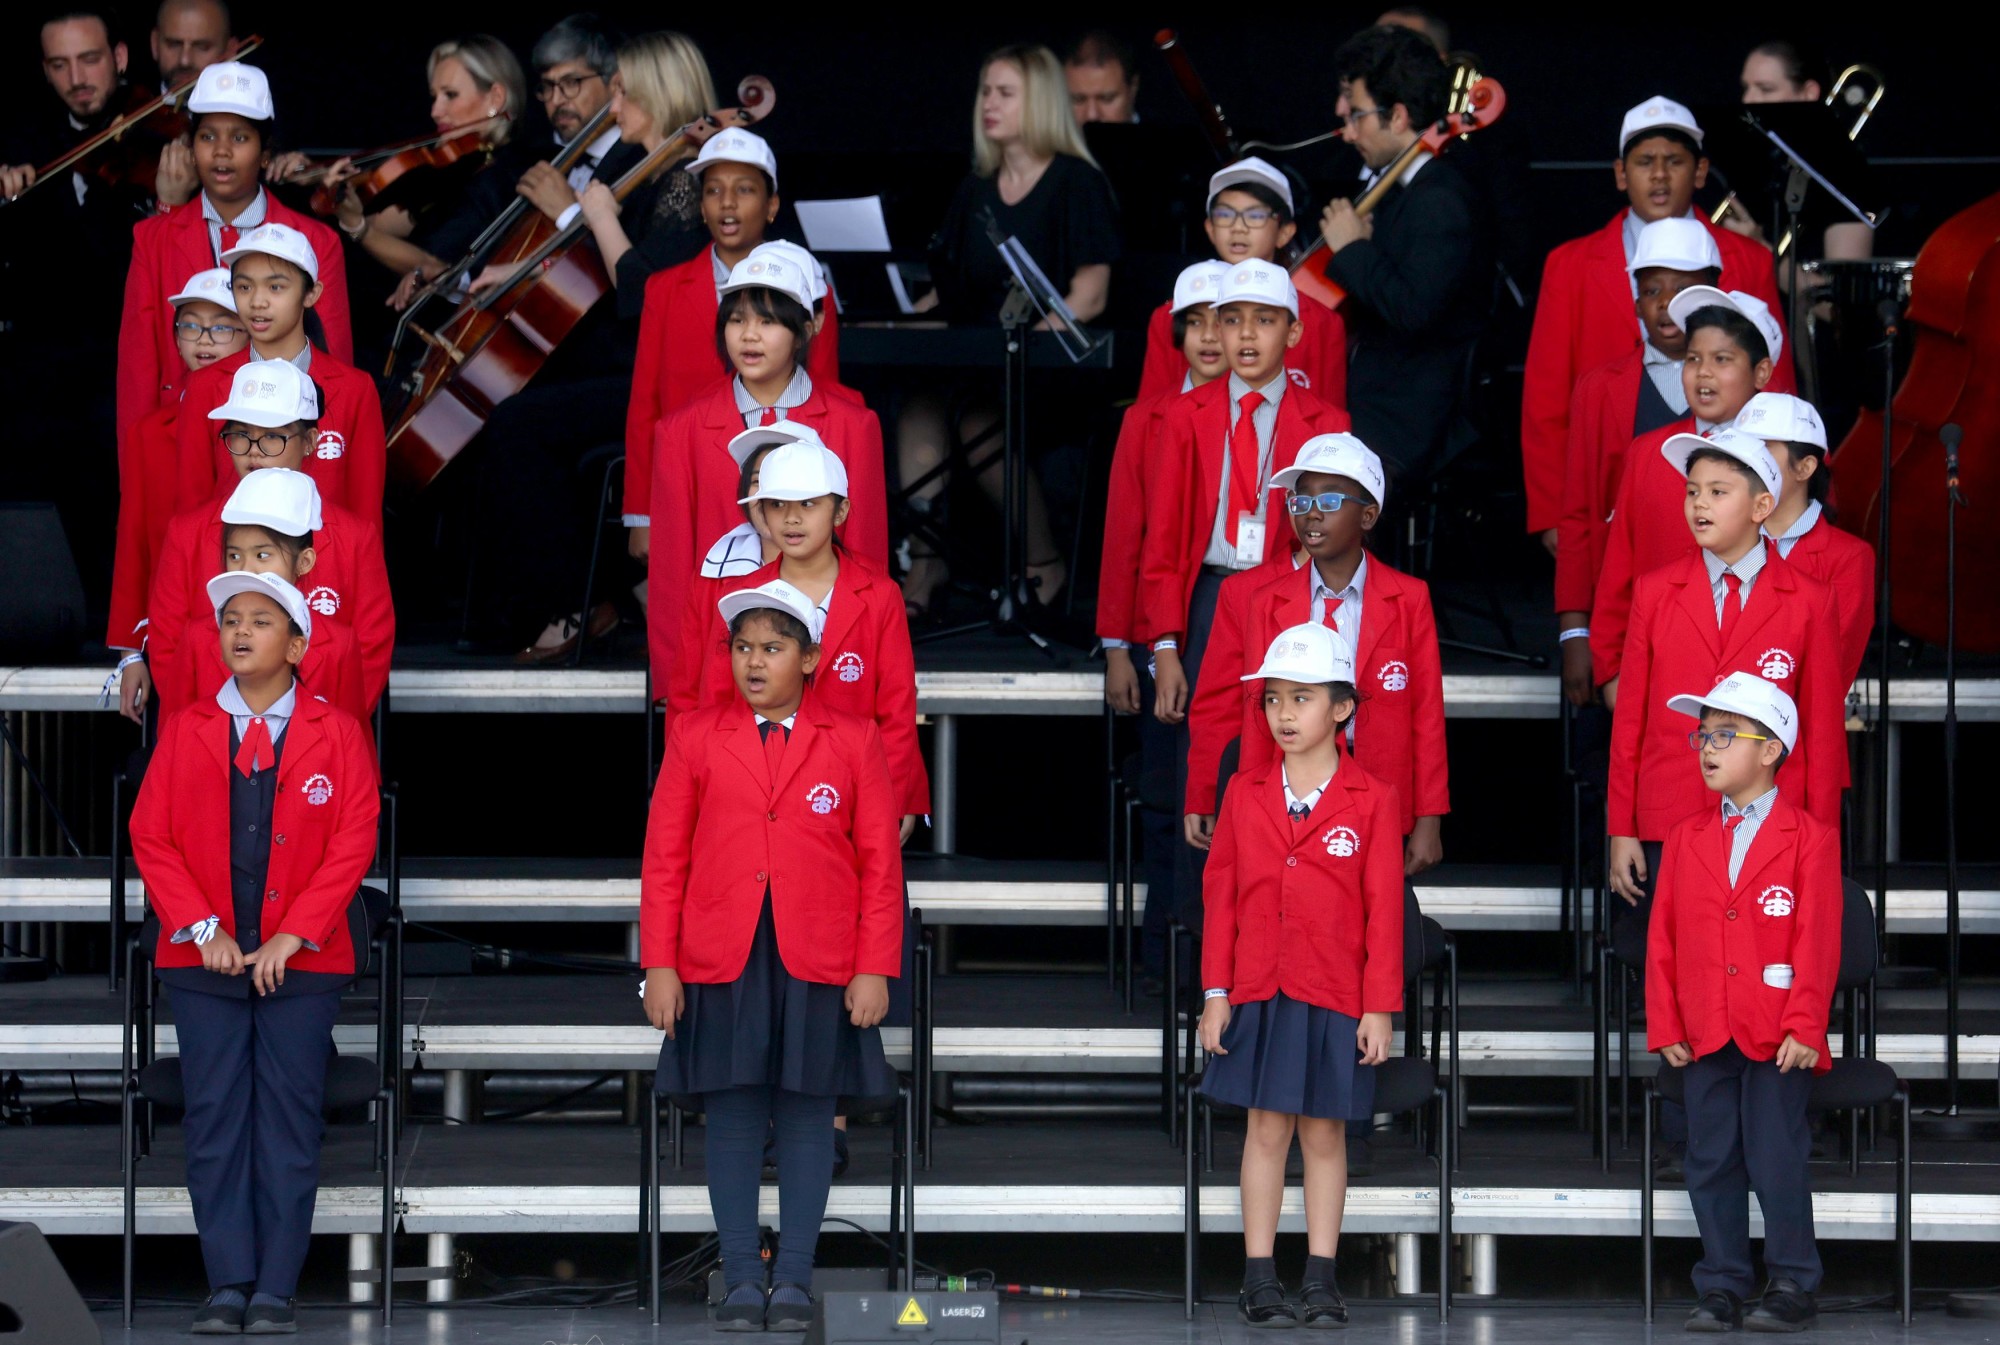 School choirs perform ‘Nasheed Al Wasl’ at Jubilee Stage m67146